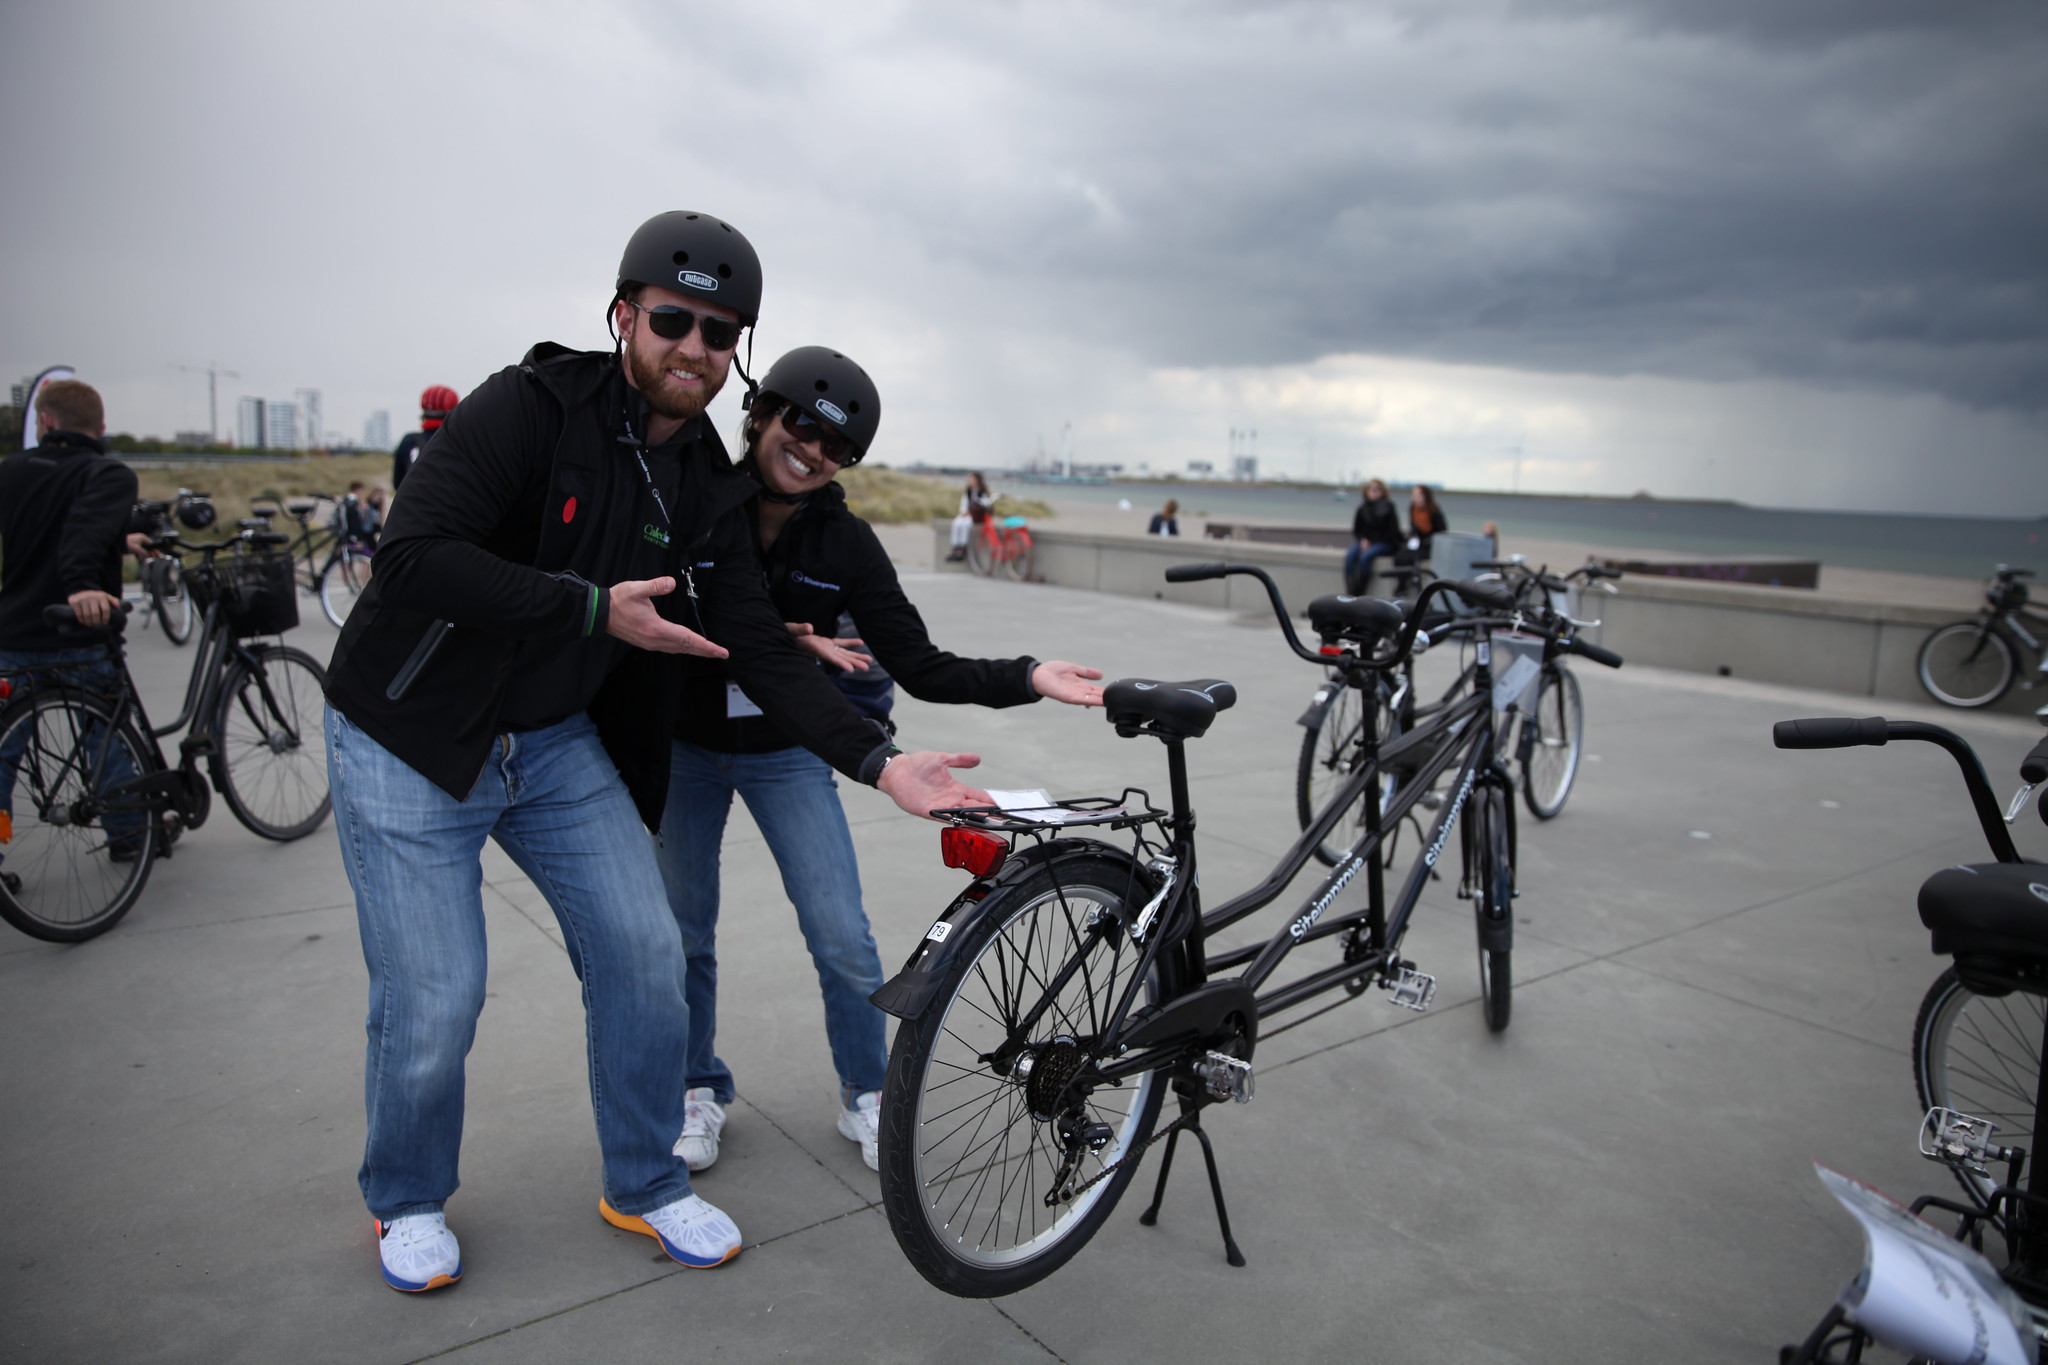 Siteimprove GAAD 2015 event on a beach, with tandem bikes